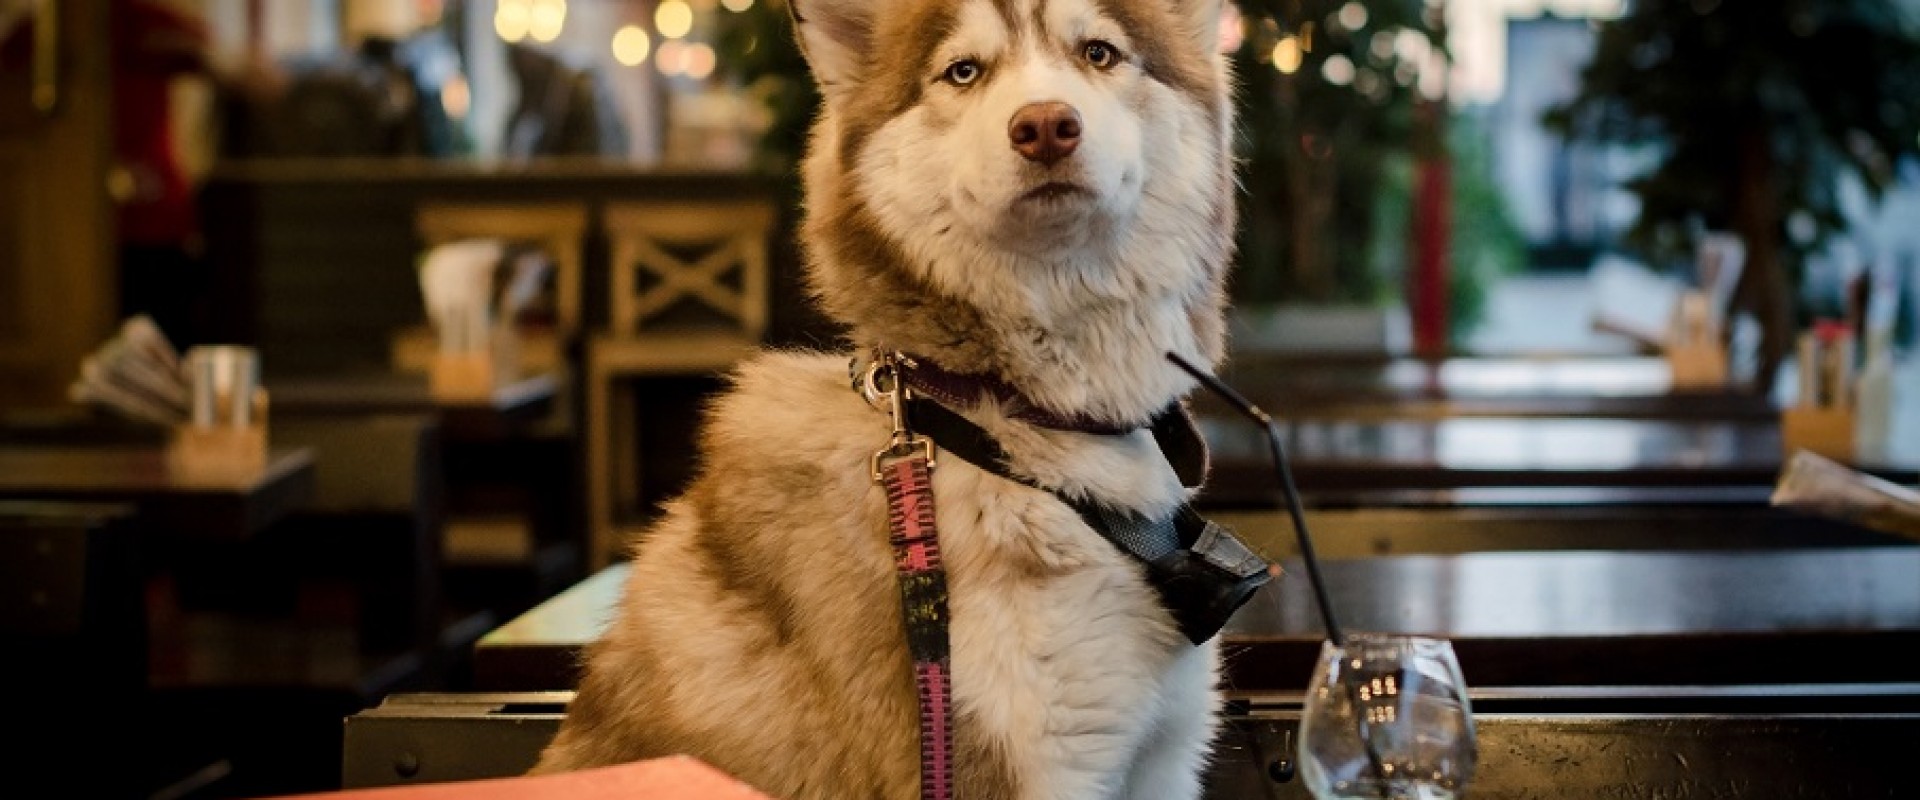 Собака — друг ресторатора? Монологи владельцев dog-friendly-заведений